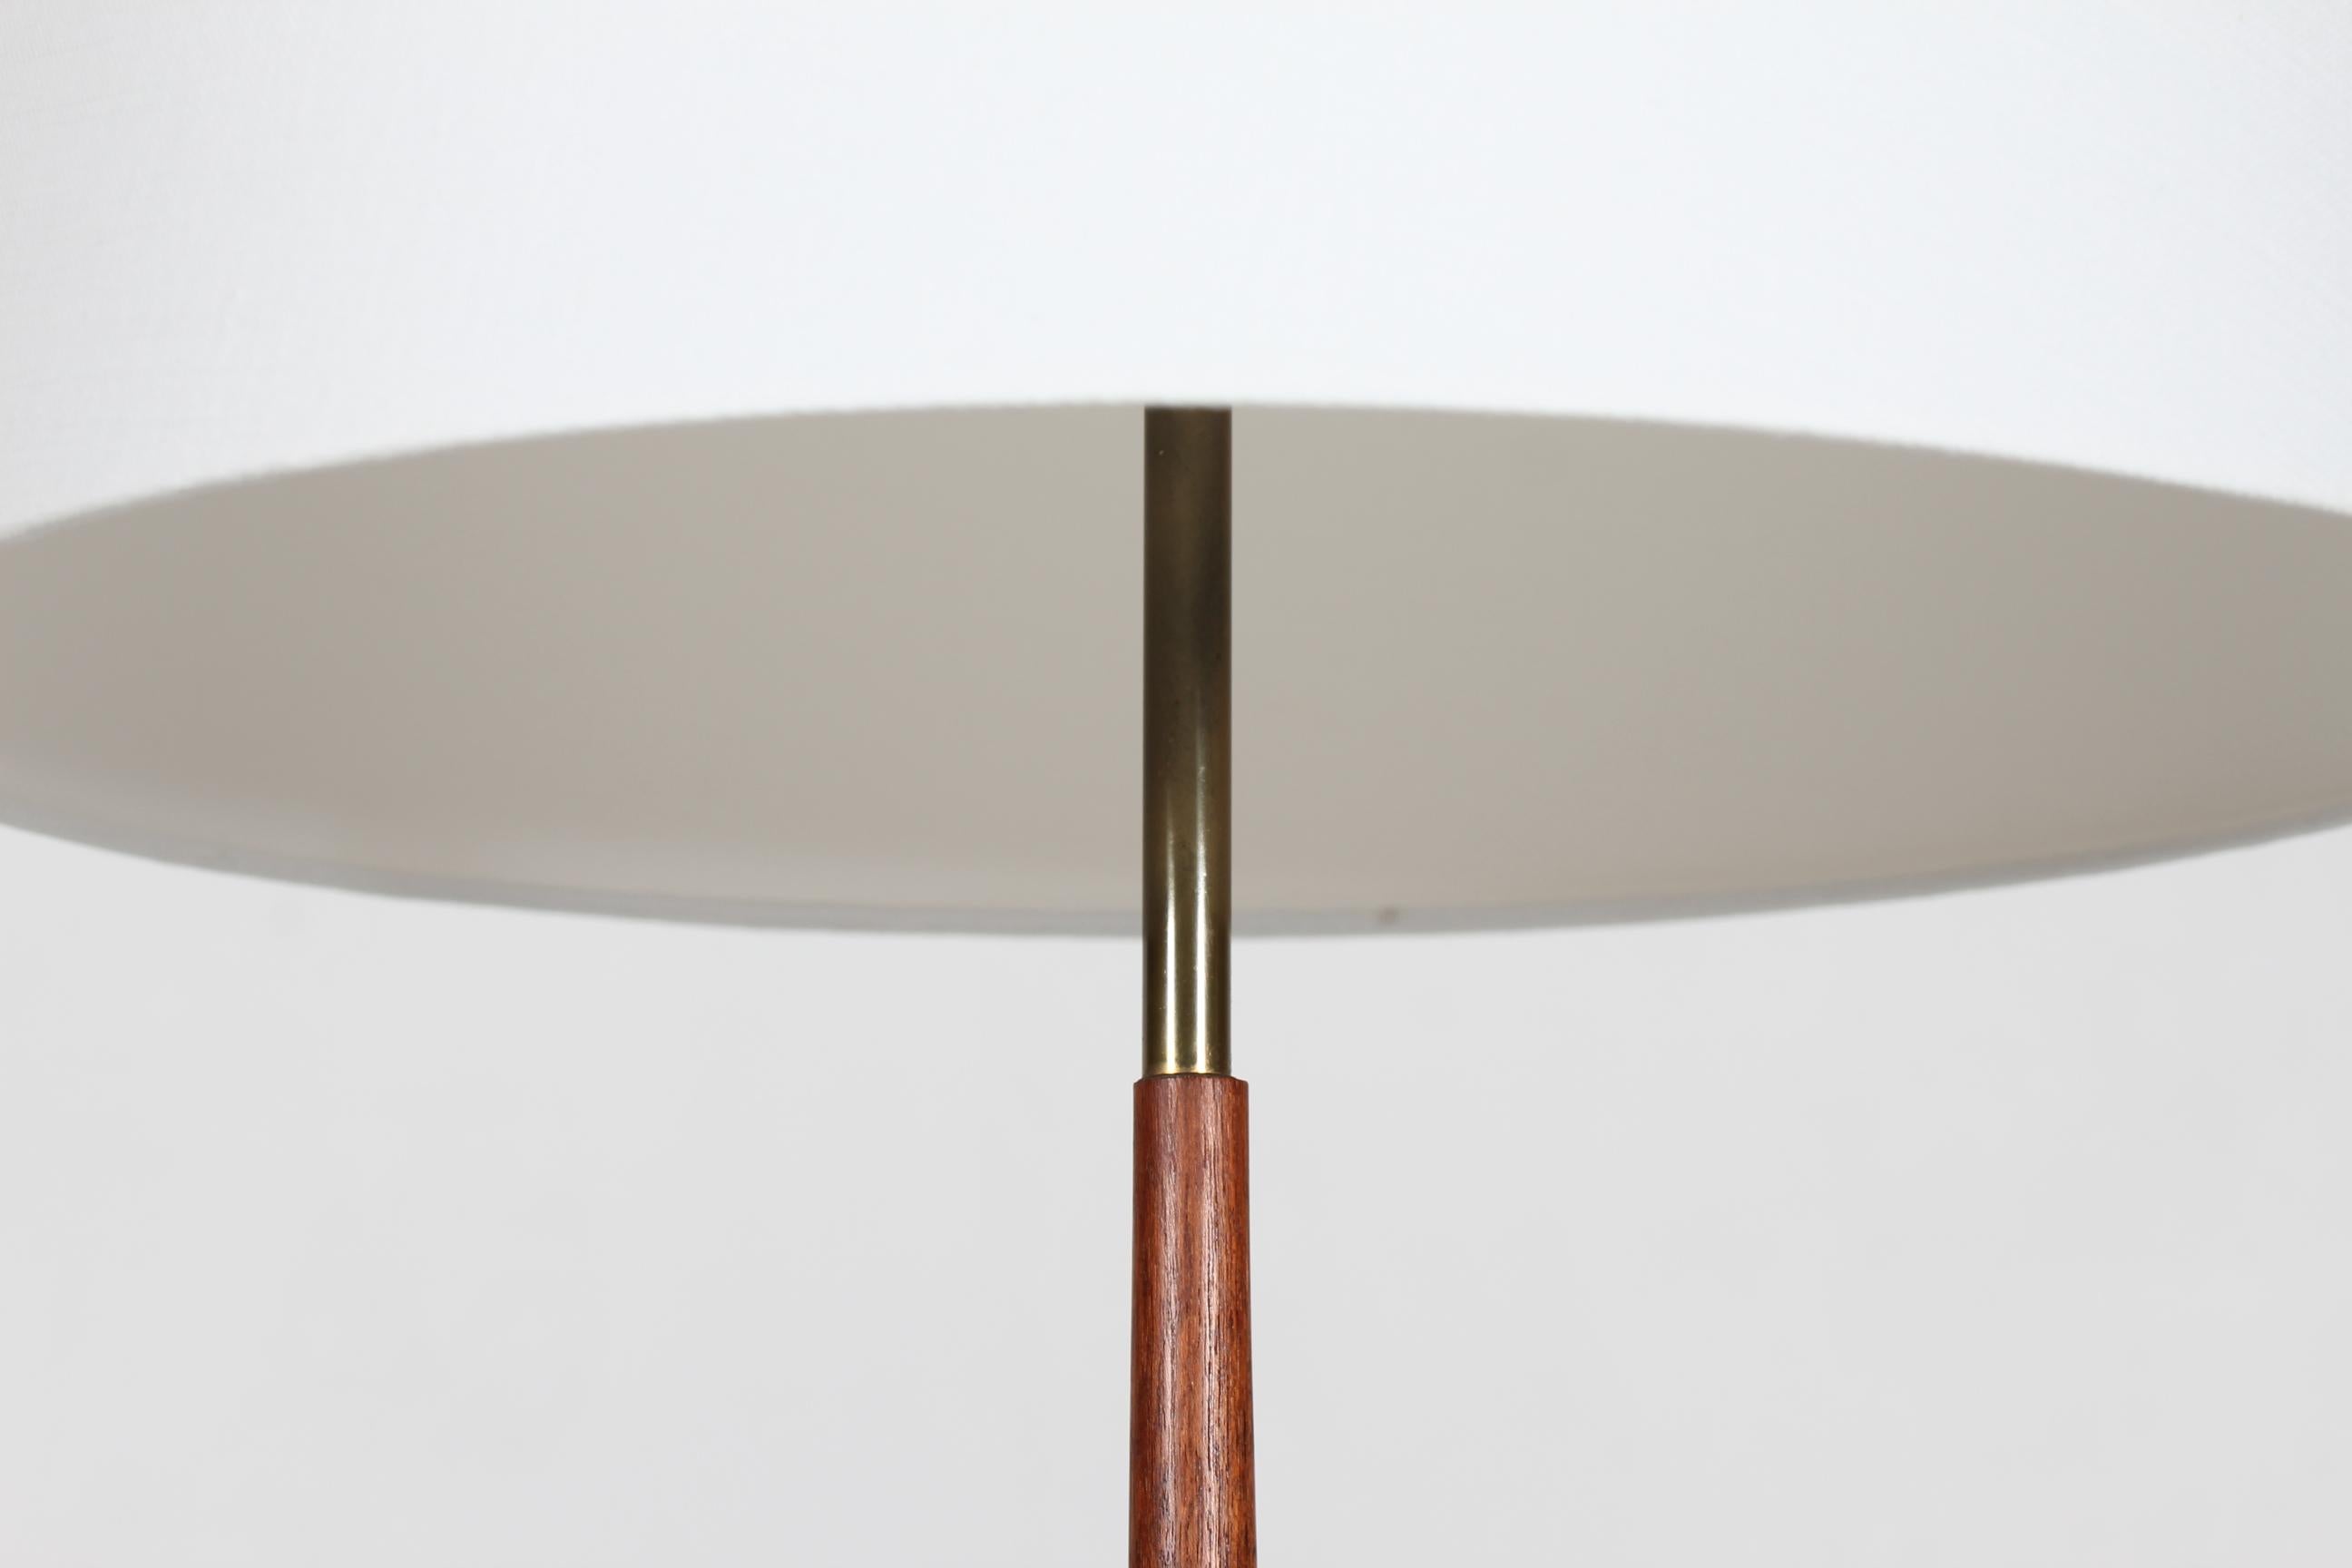 Scandinavian Modern Tripod Floor Lamp by Fog & Mørup made of Teak and Brass with New Shade, Denmark